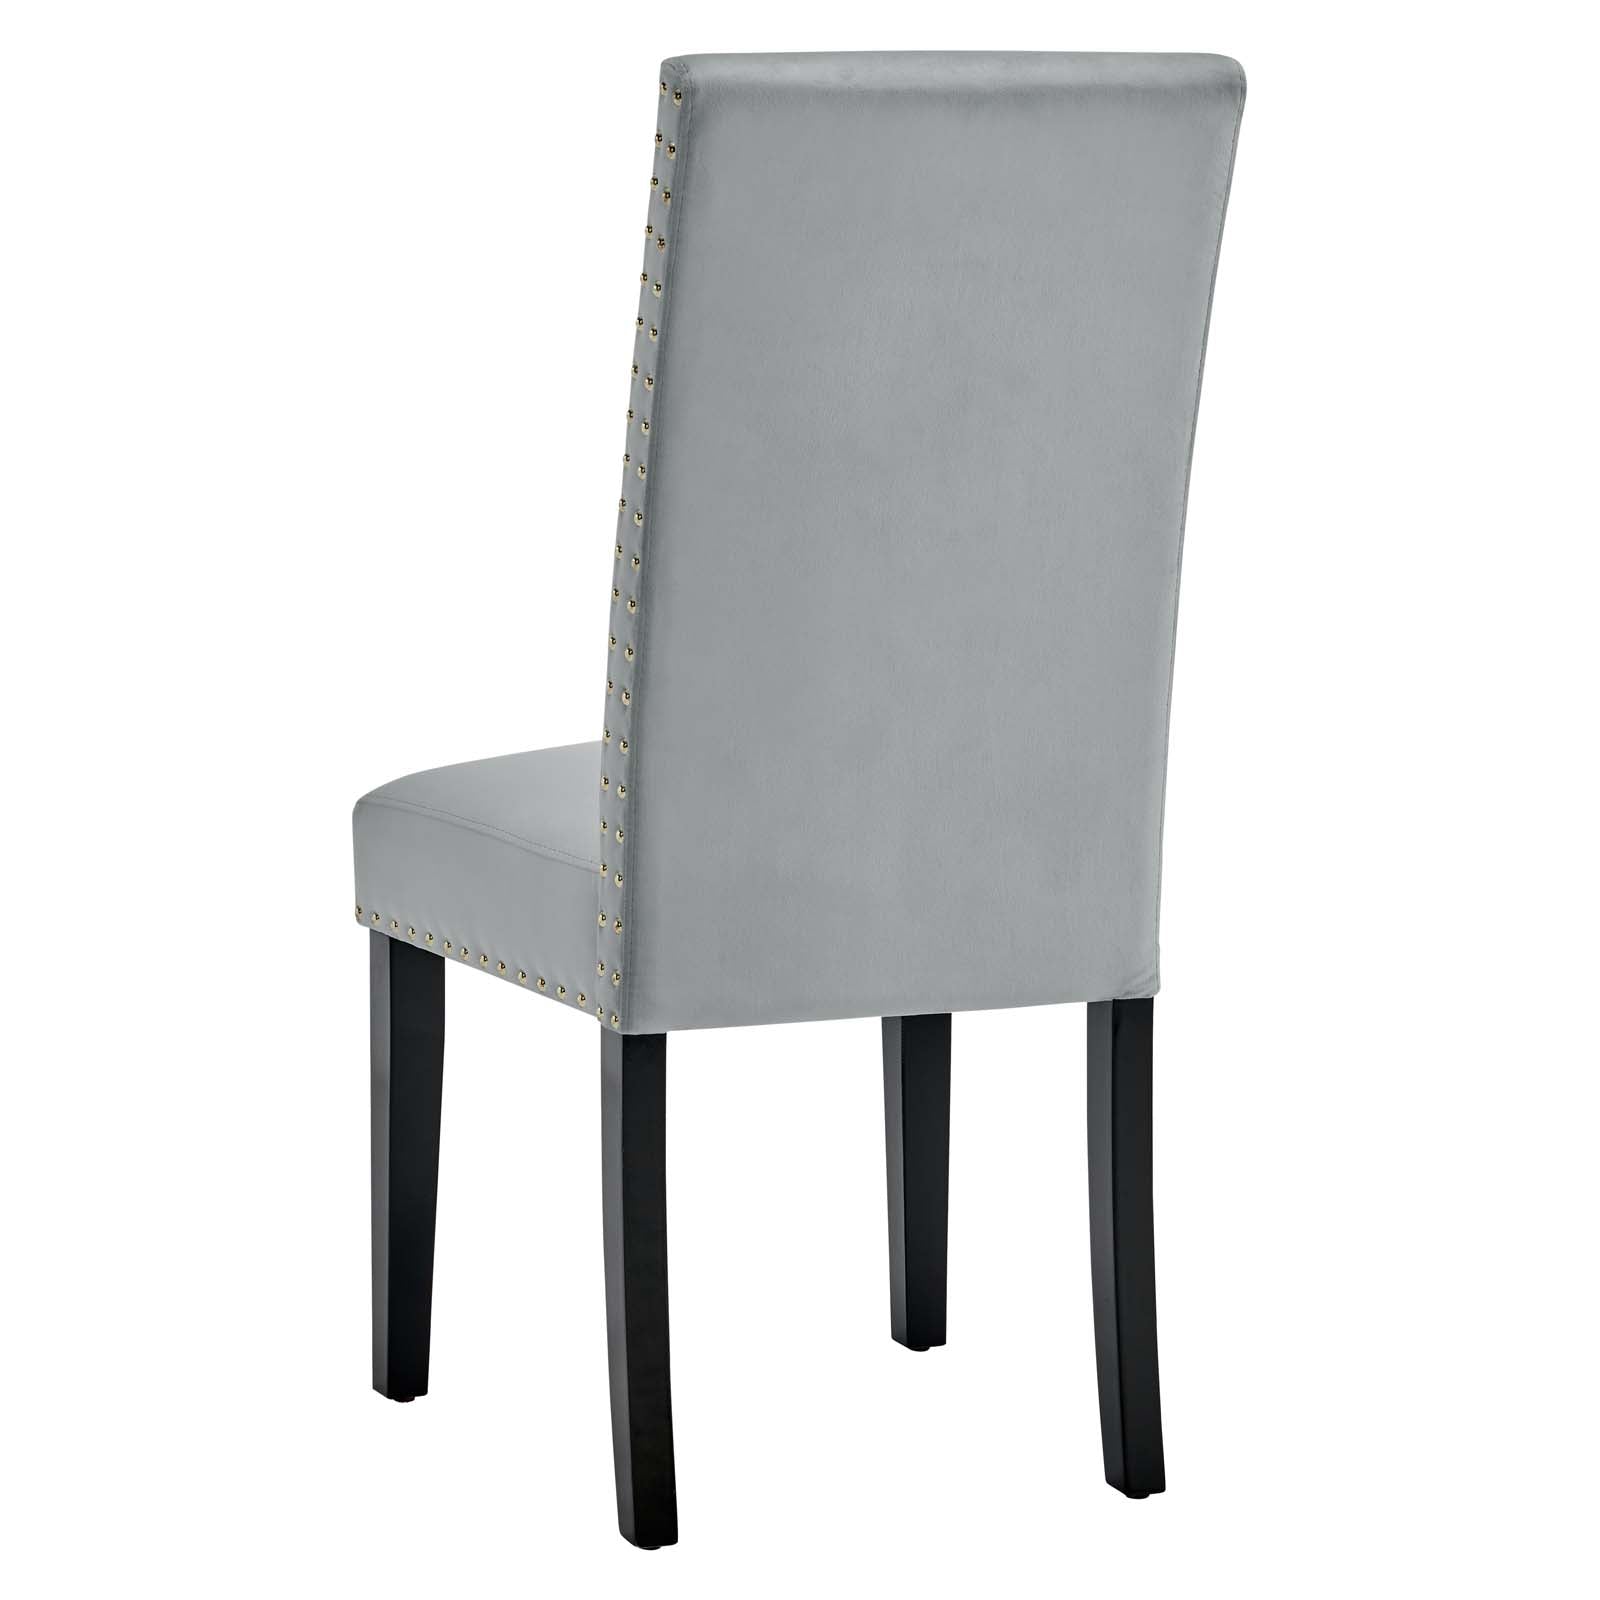 Parcel Performance Velvet Dining Side Chairs - Set of 2